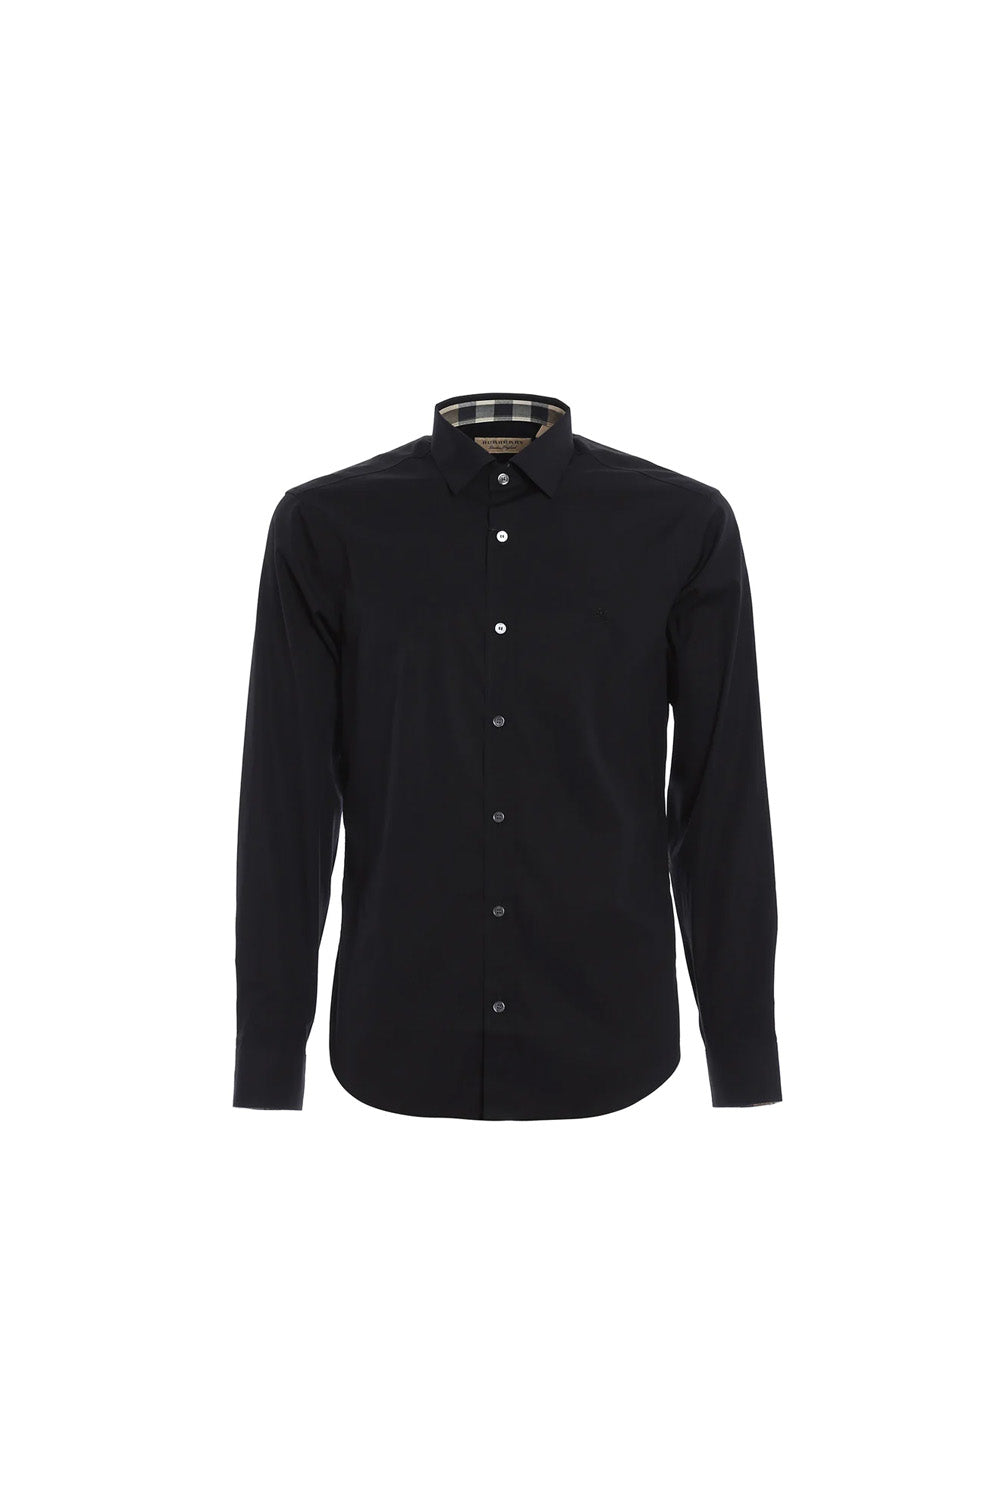 Burberry black Shirt